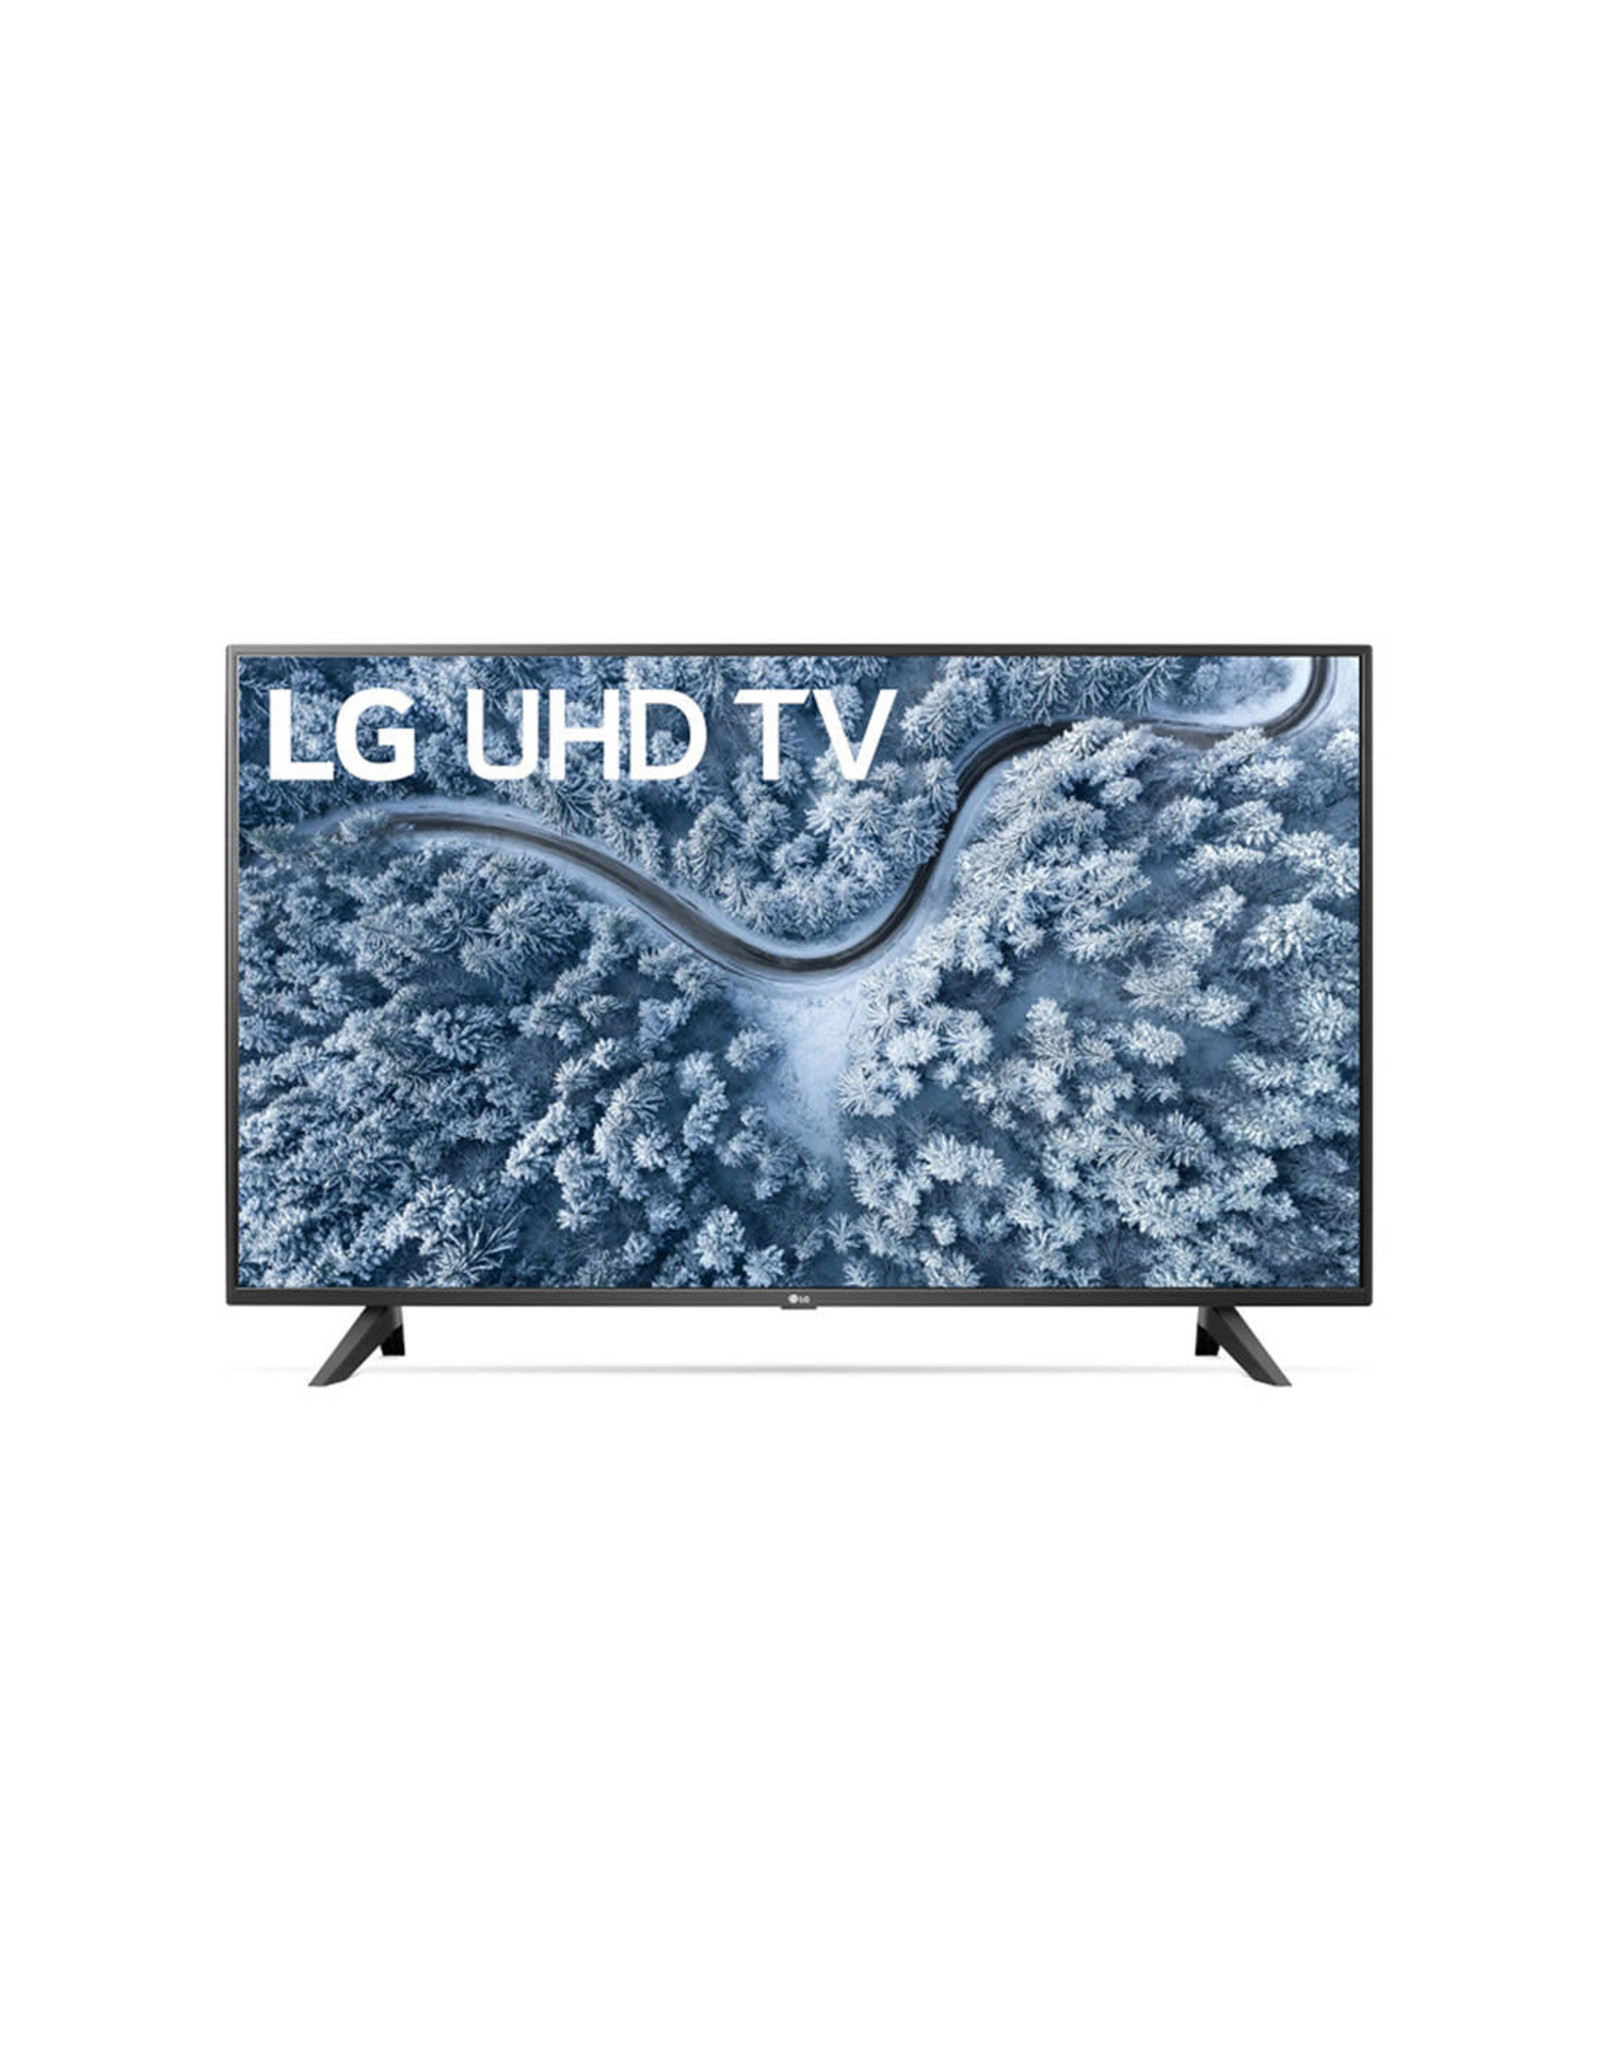 LG Electronics LG UHD 70 Series 55 inch Class 4K Smart UHD TV (54.6'' Diag)